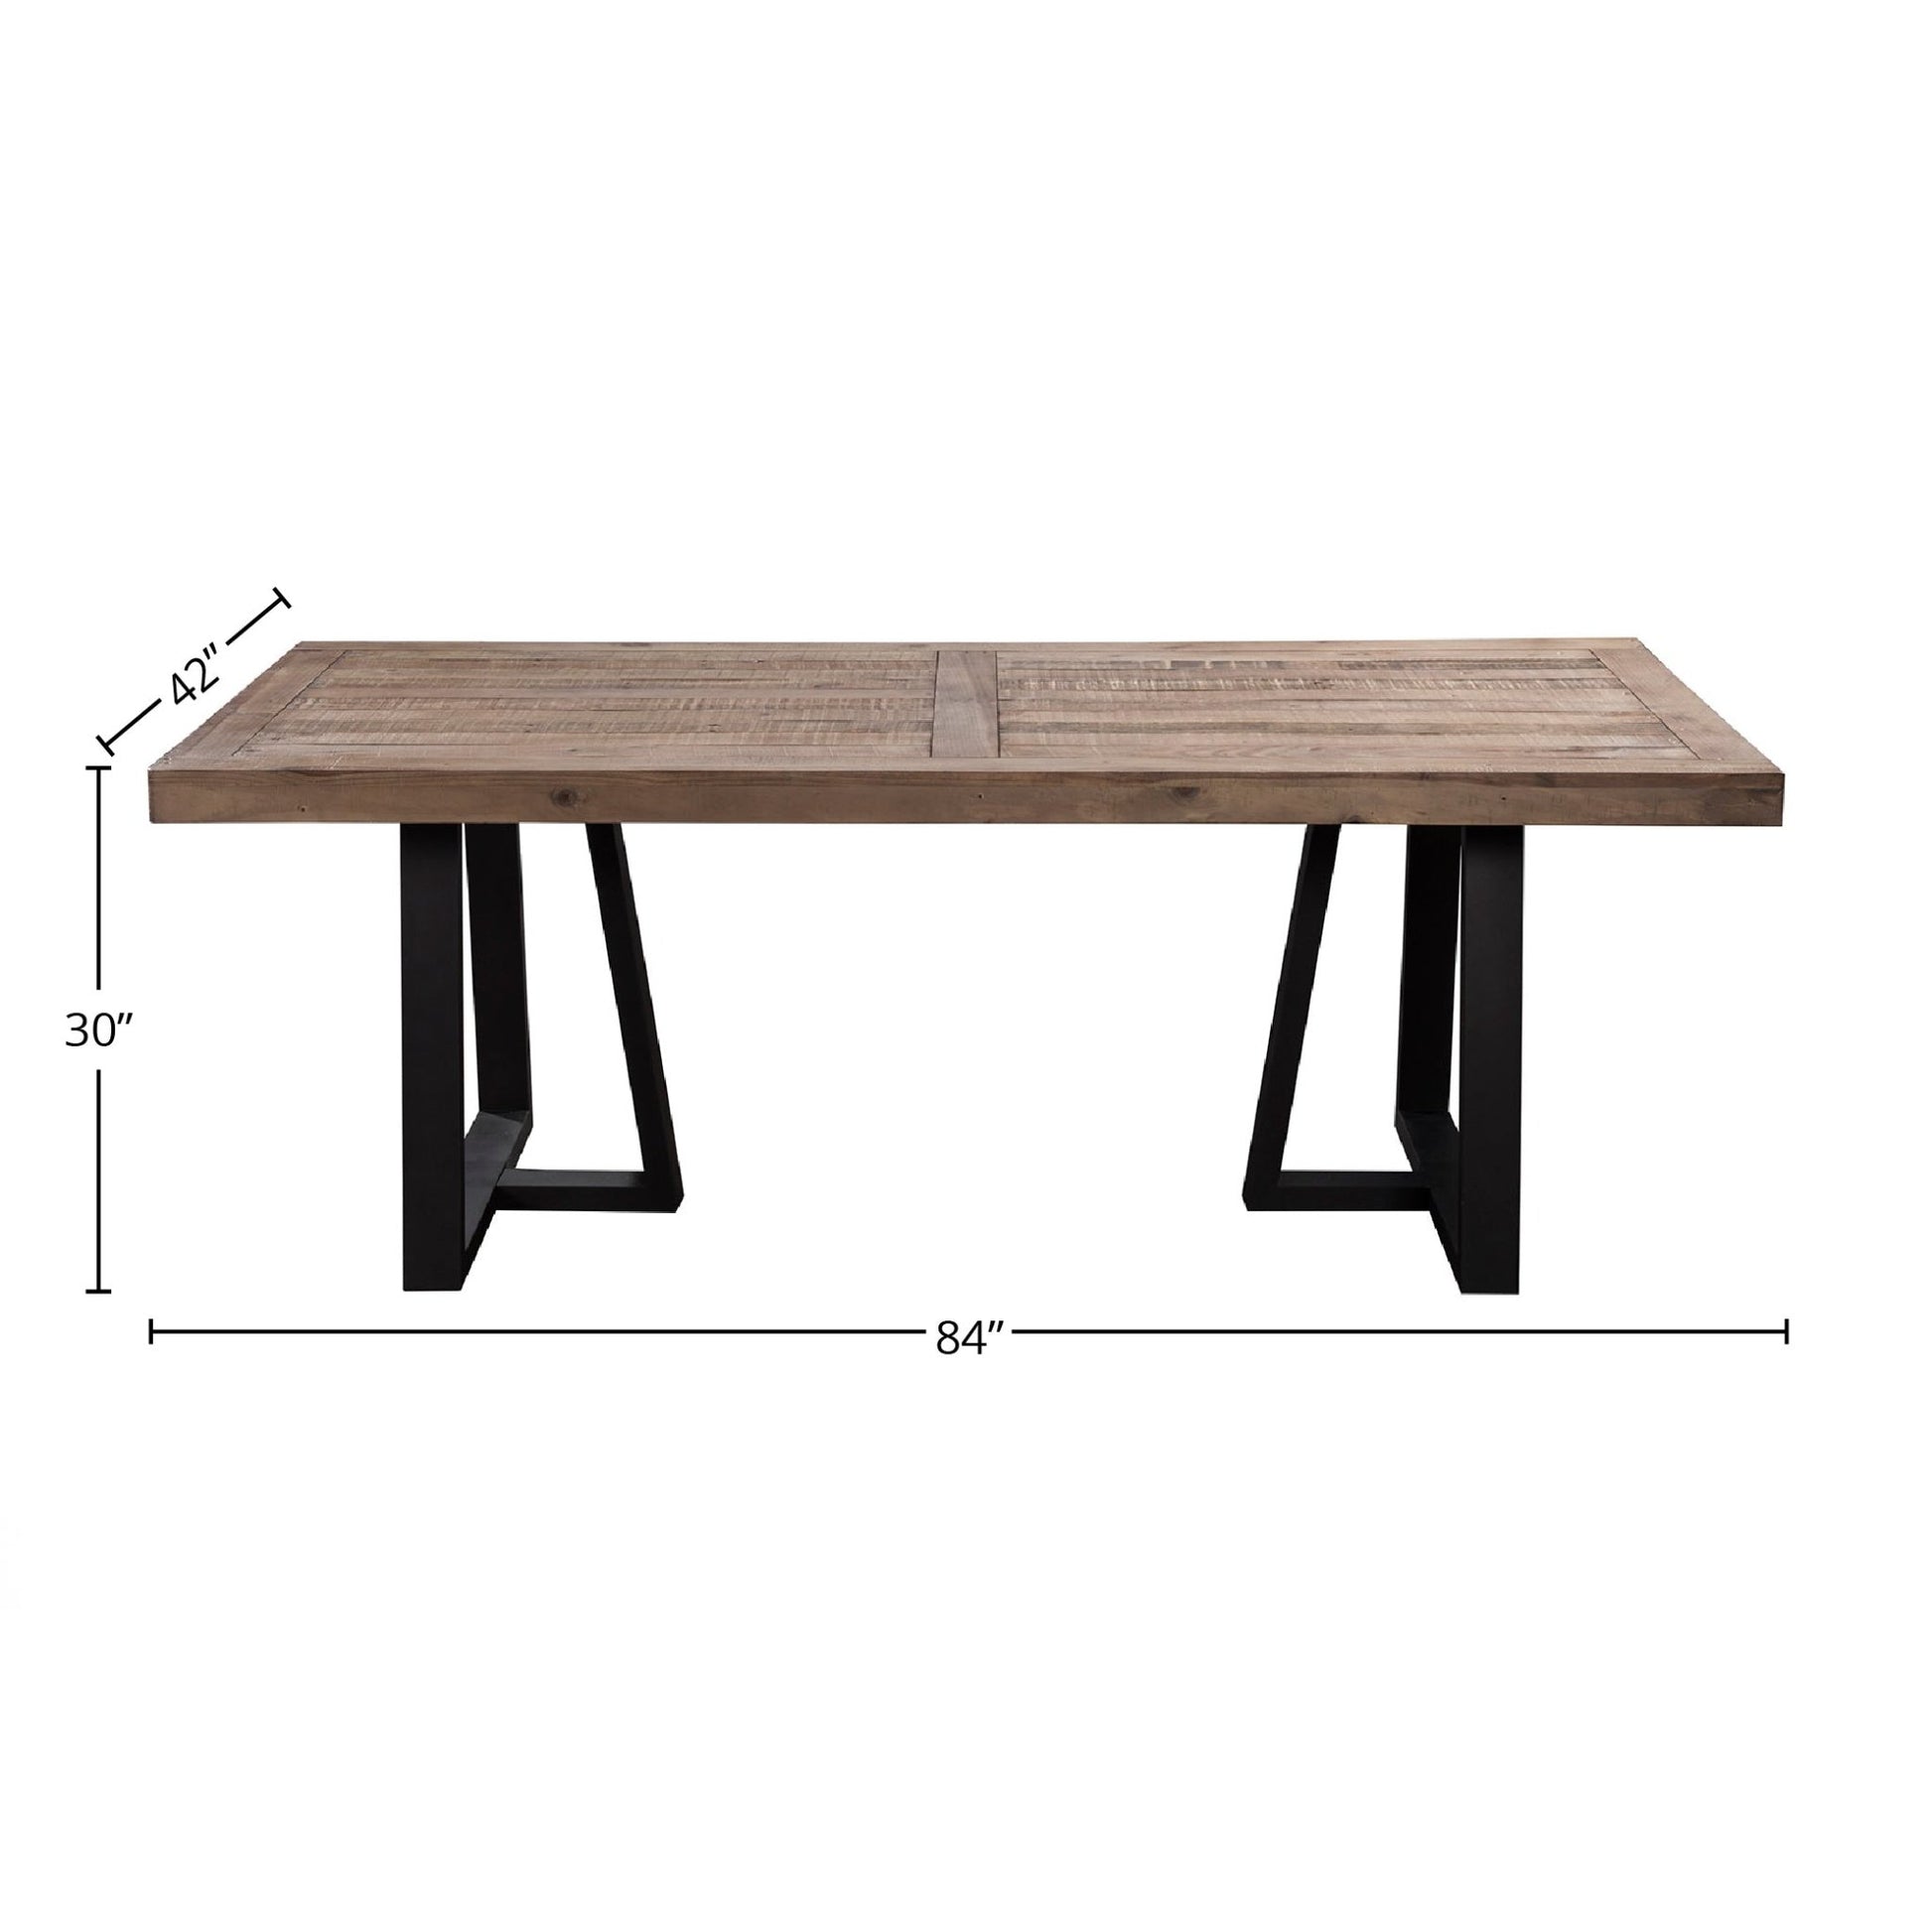 Prairie Rectangular Dining Table, Natural/Black - Alpine Furniture